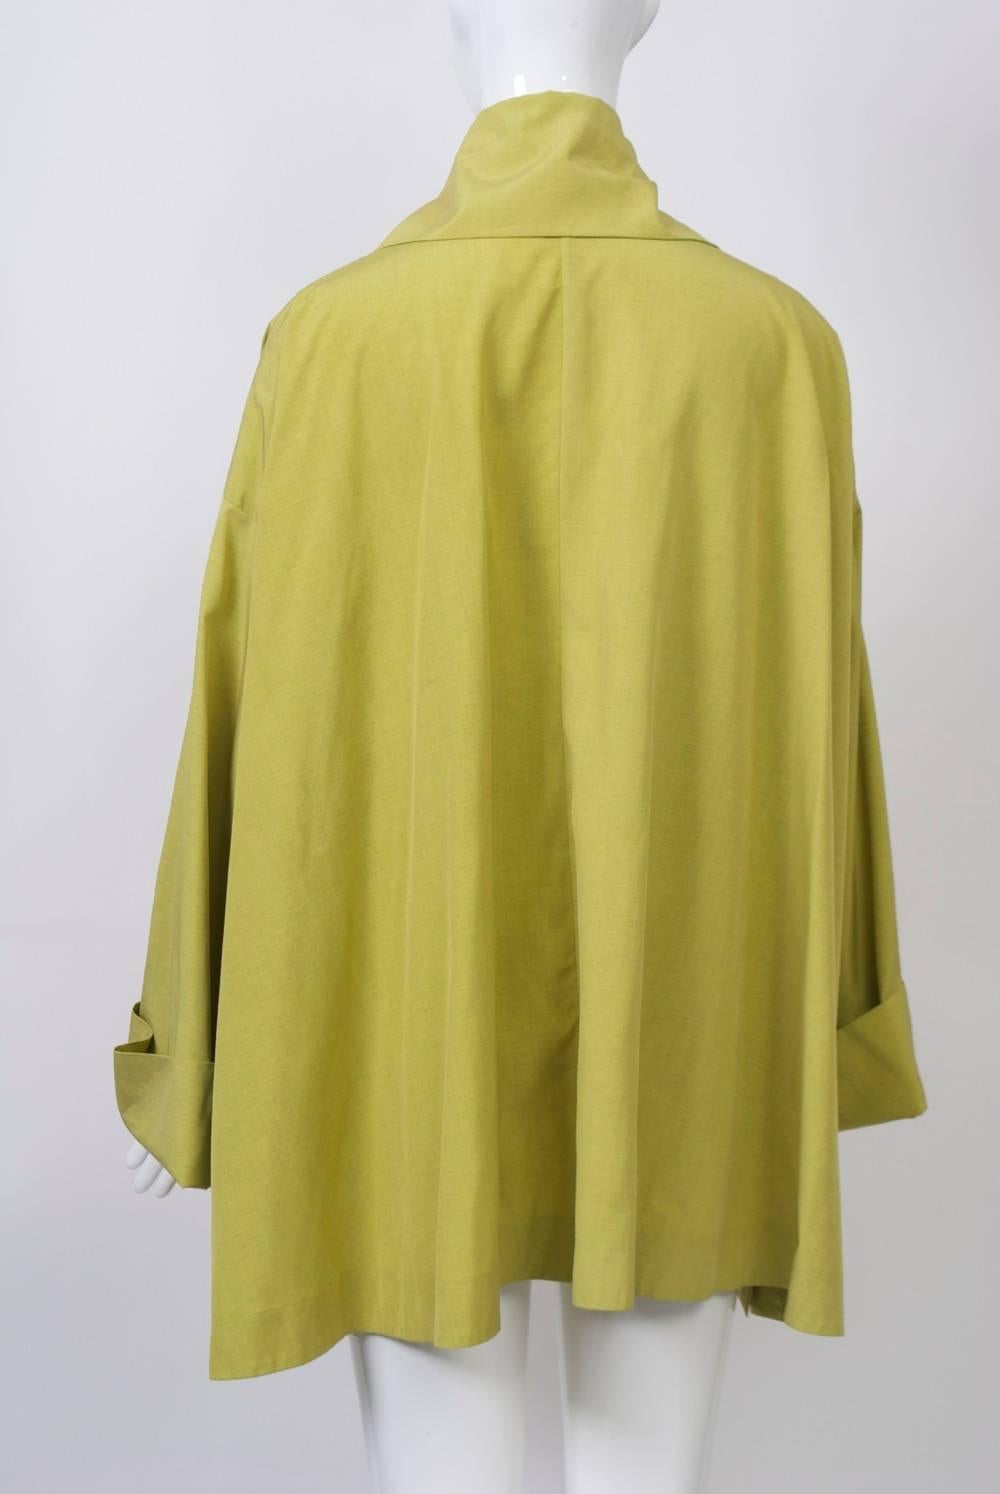 Women's Romeo Gigli Oversized Shirt/Jacket